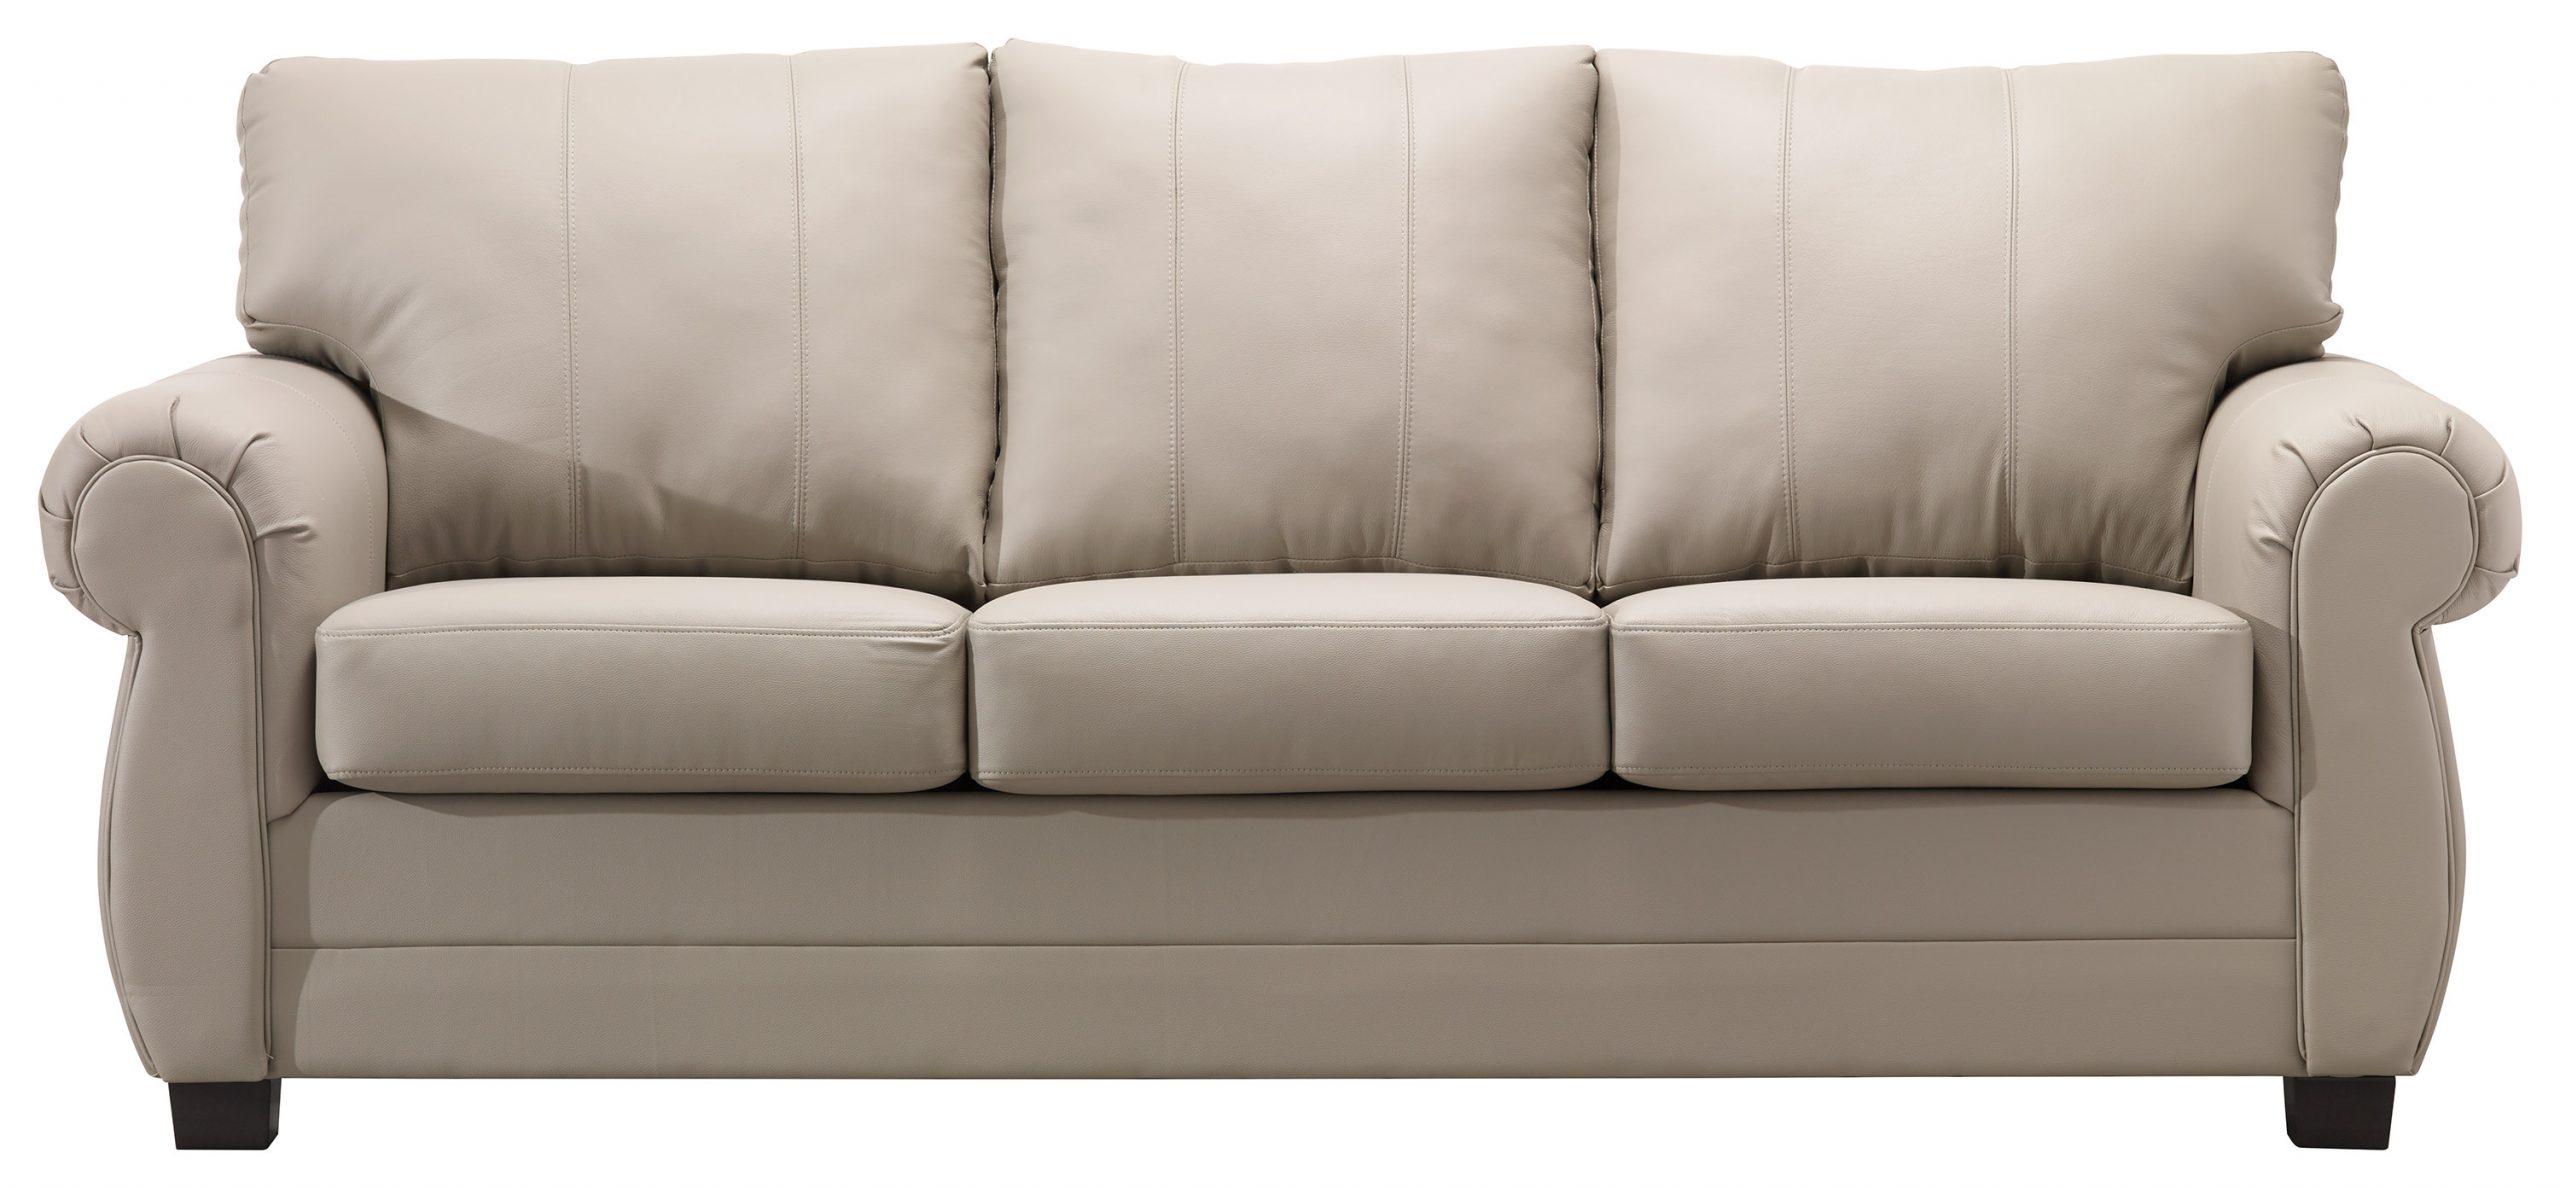 weathered gray leather sofa